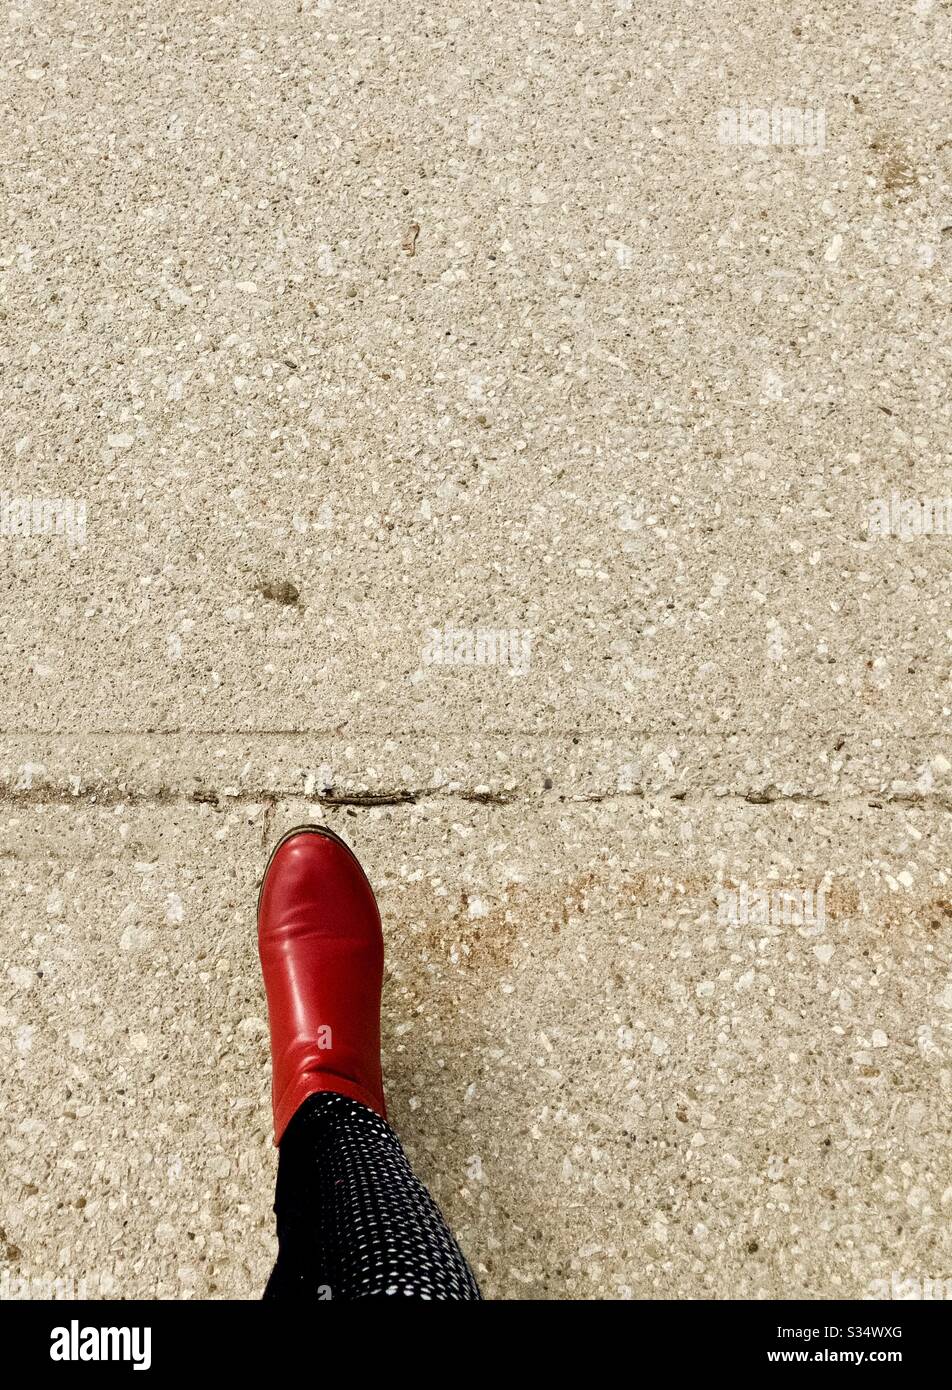 Bota de tobillo roja en el pavimento de hormigón Foto de stock